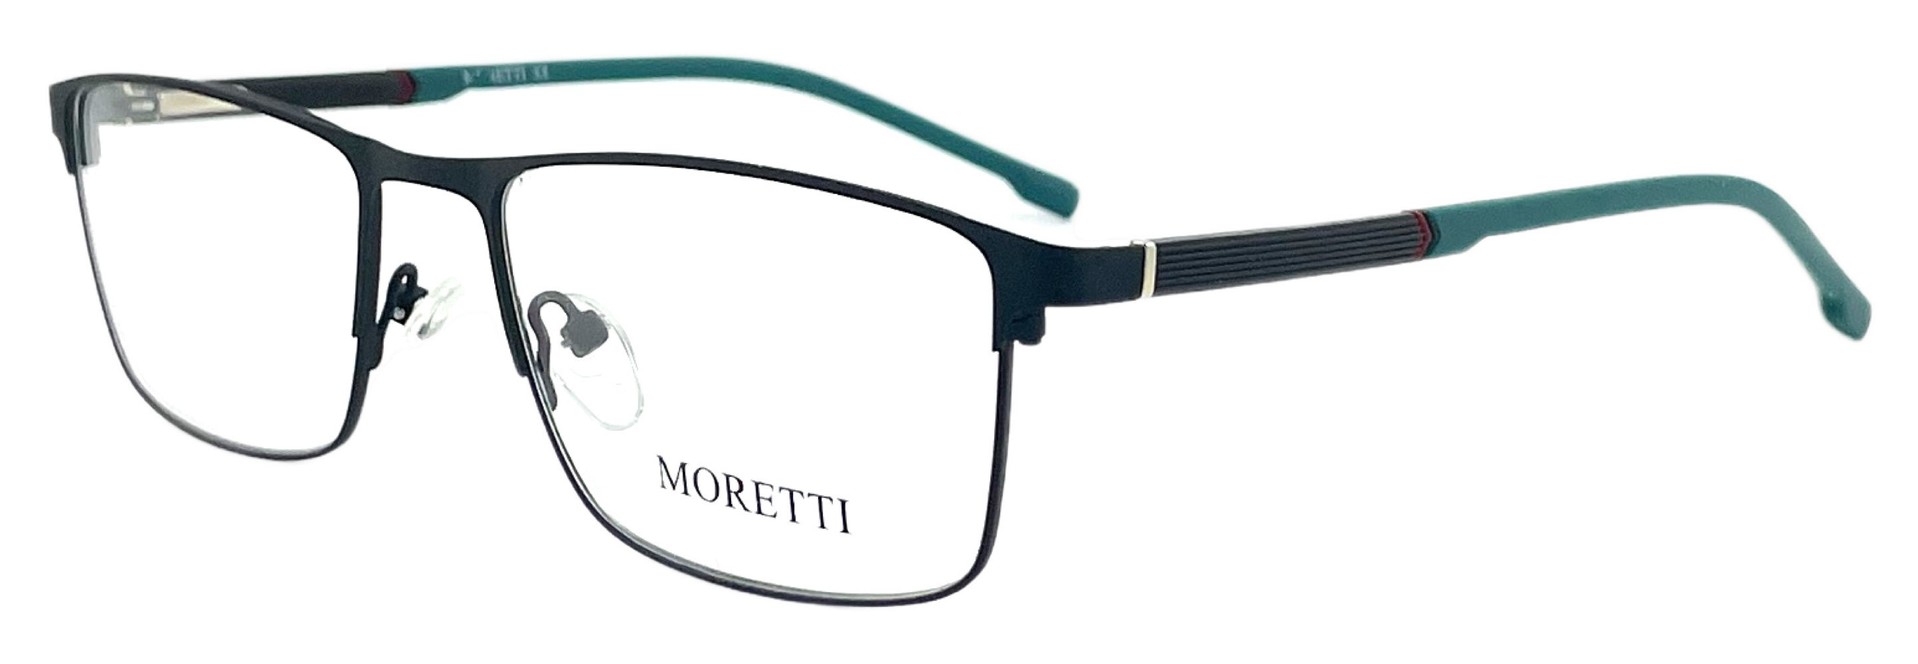 Moretti HE02-04 C11A 2